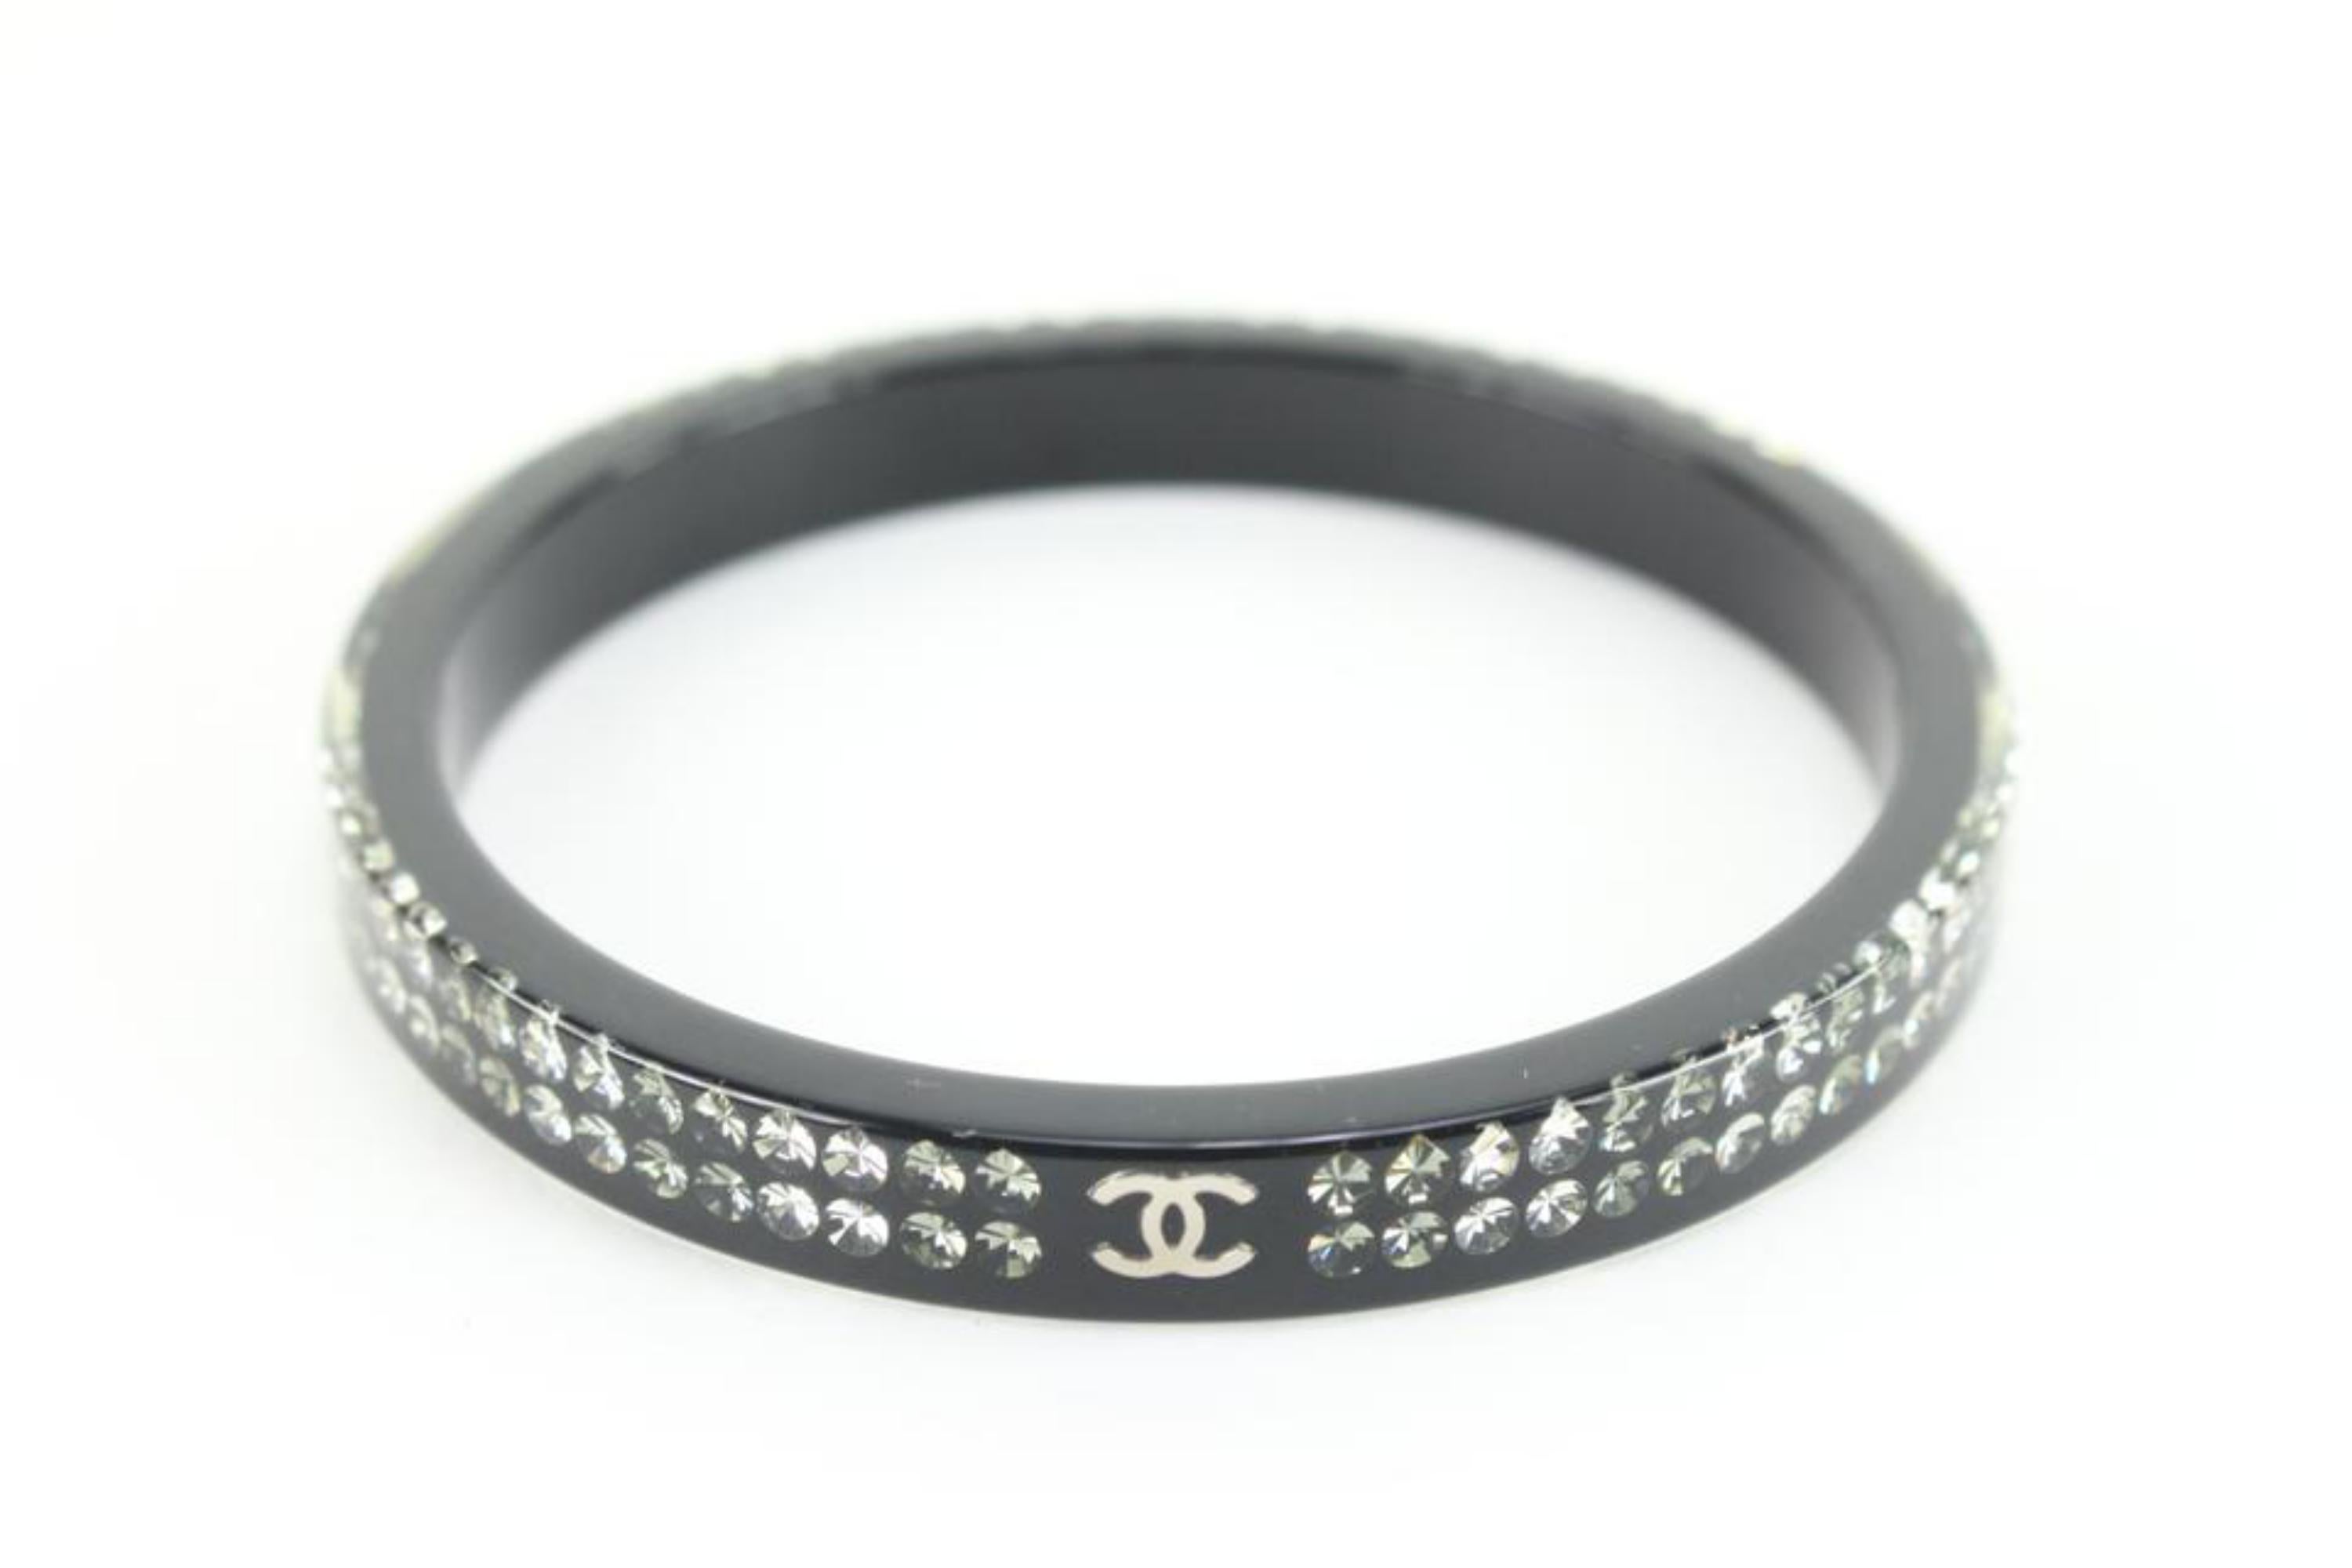 Chanel 2011 Black Crystal CC Logo Bangle Bracelet 26ck824s 7